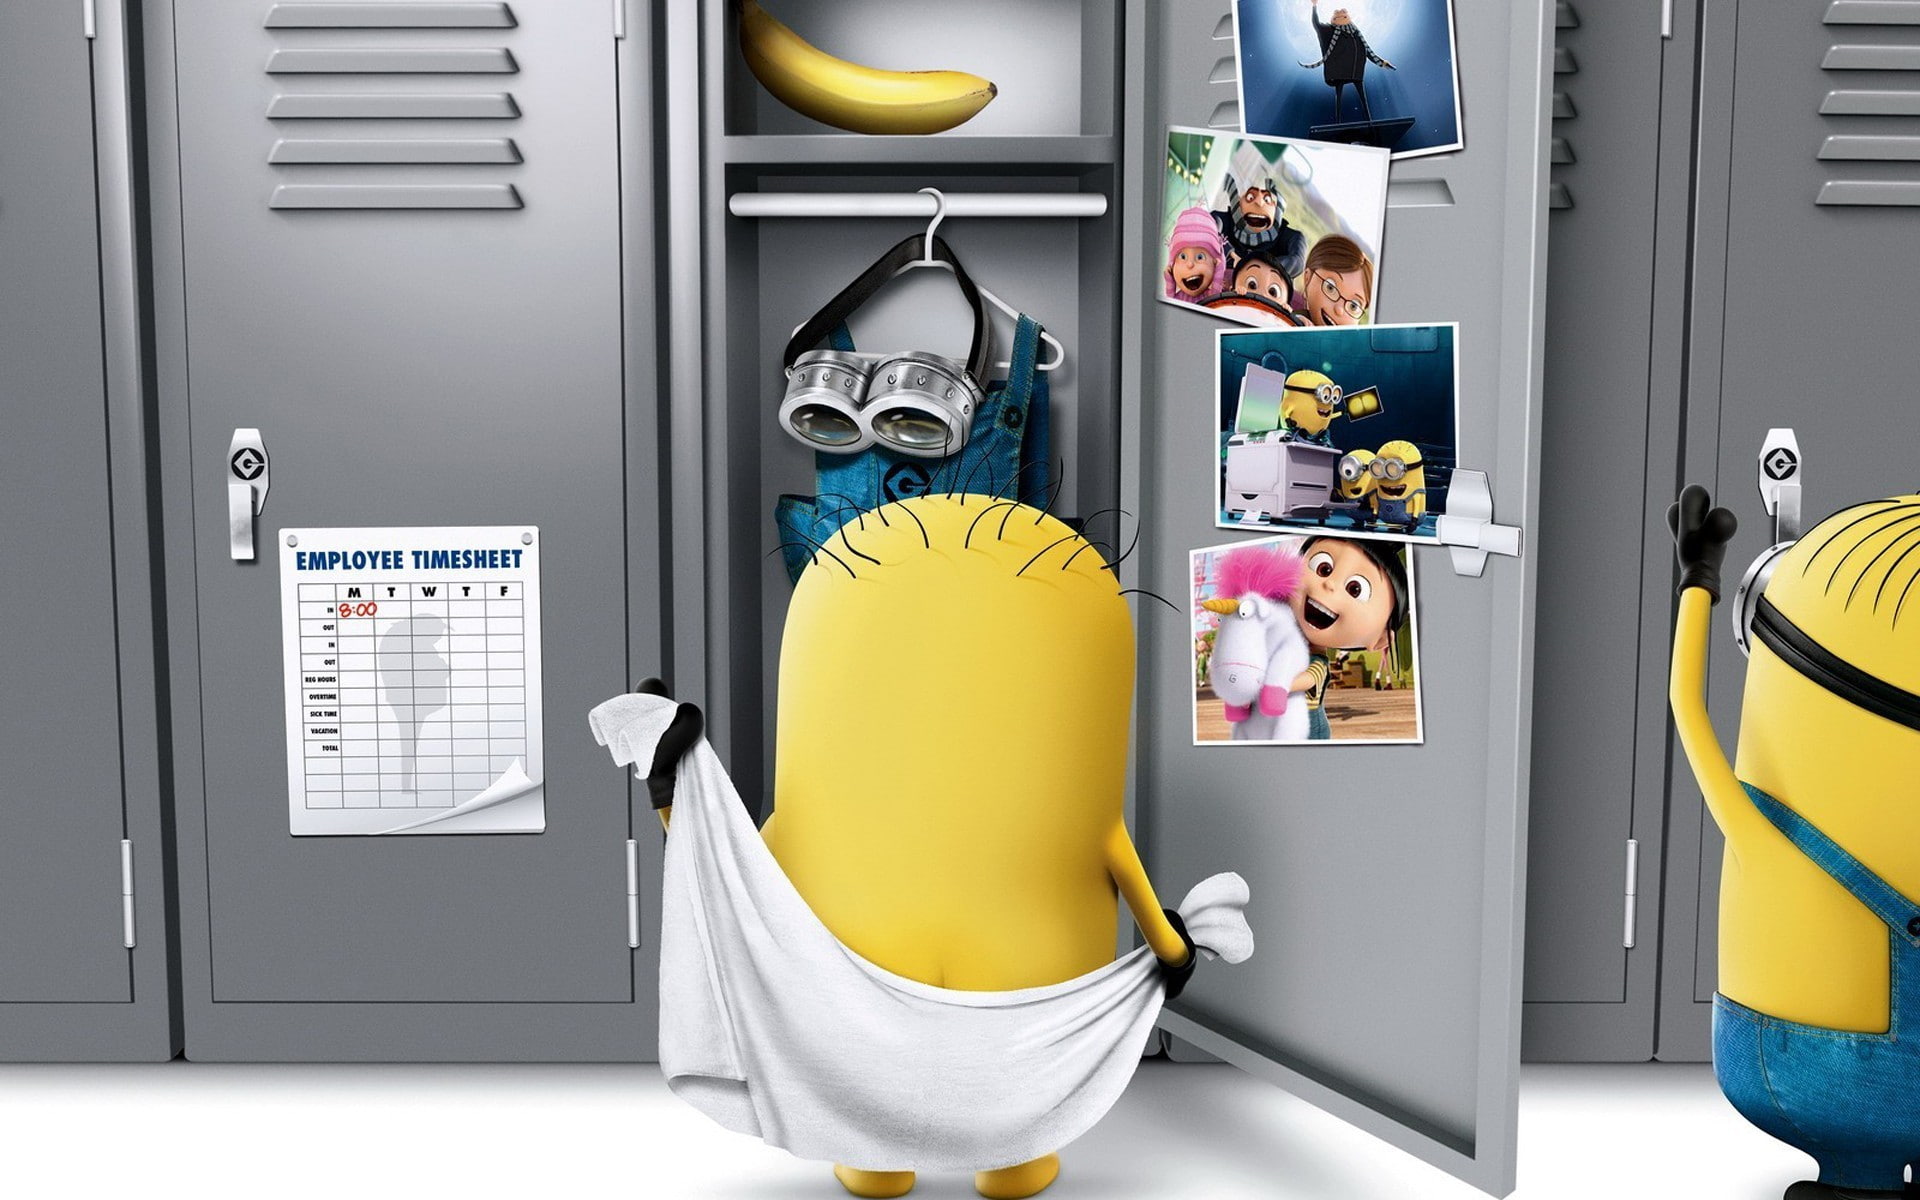 unicorns, lockers, Despicable Me, bananas, animated movies